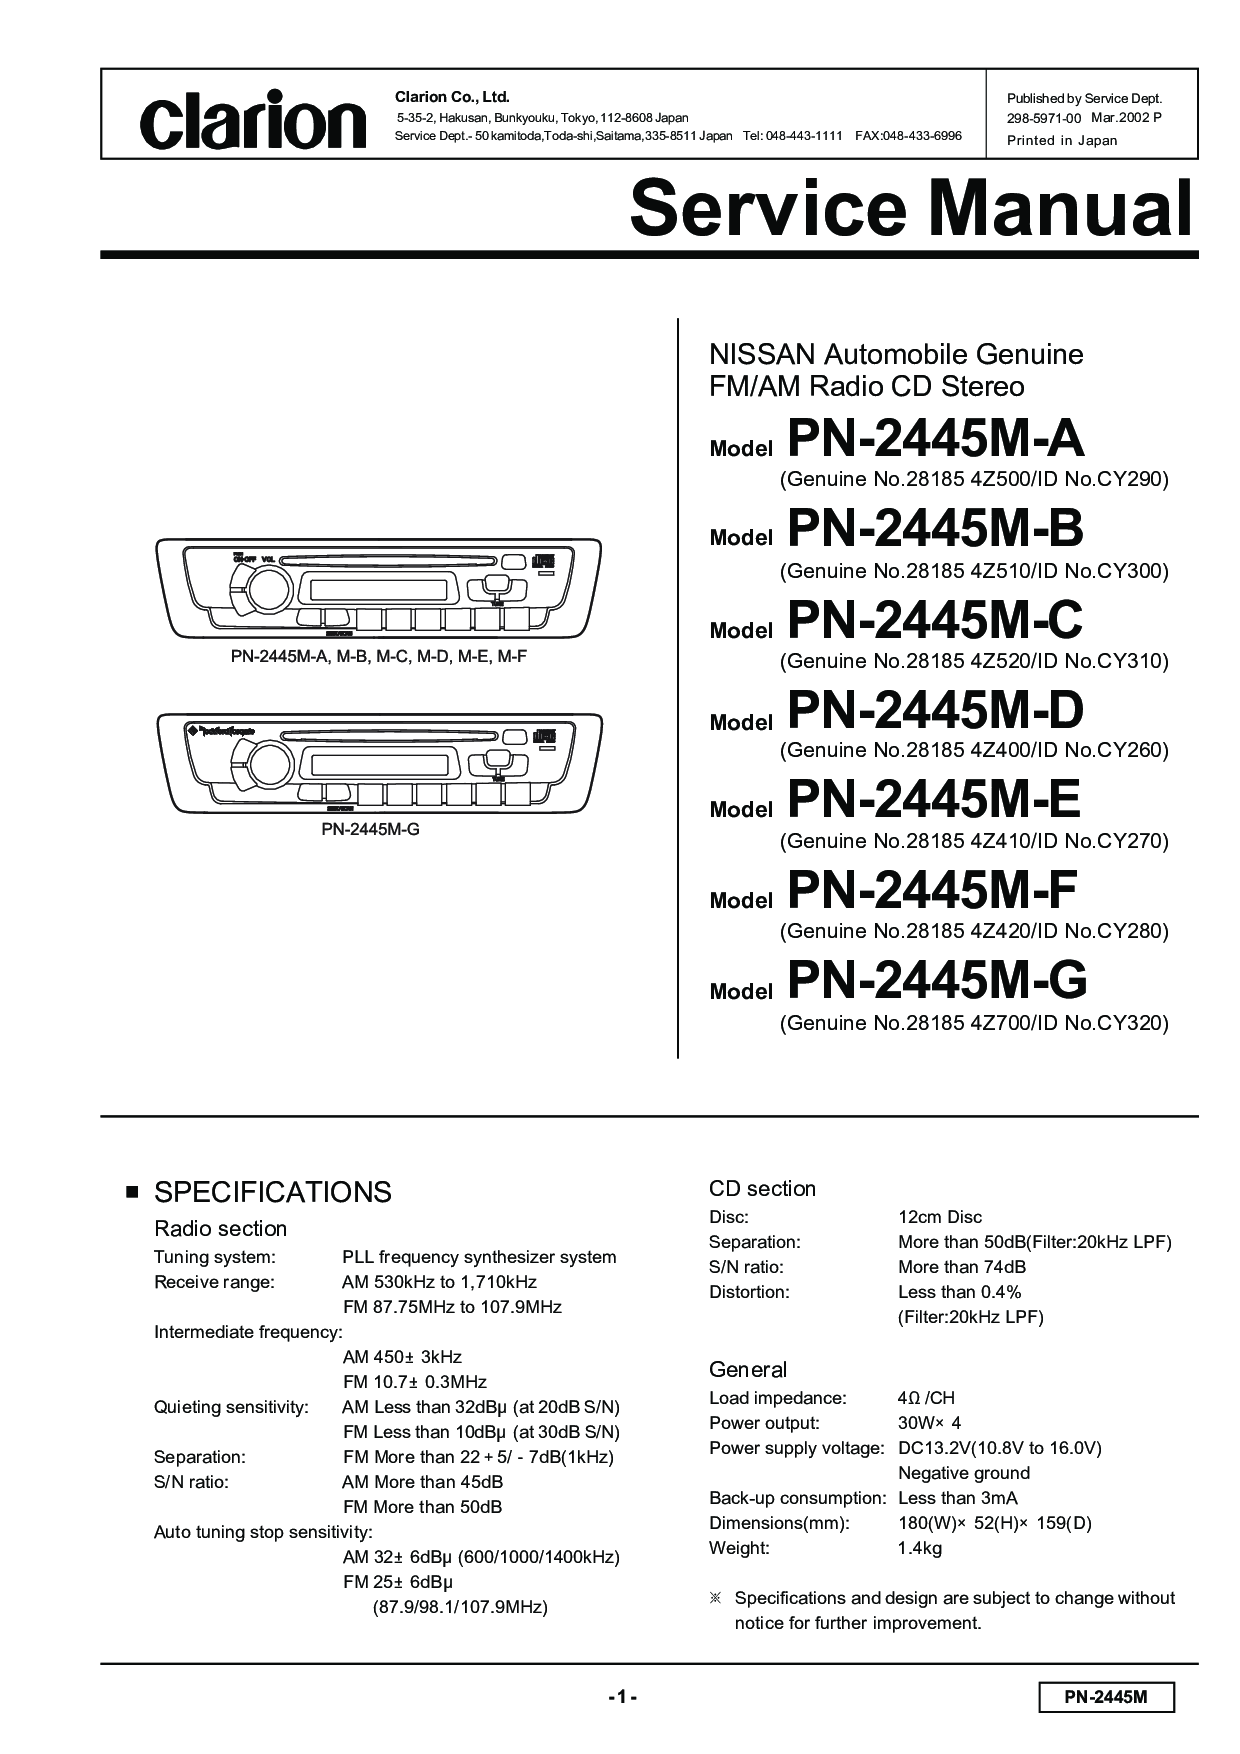 Clarion PN-2445M-E, PN-2445M-G, PN-2445M-B, PN-2445M-C, PN-2445M-F User Manual